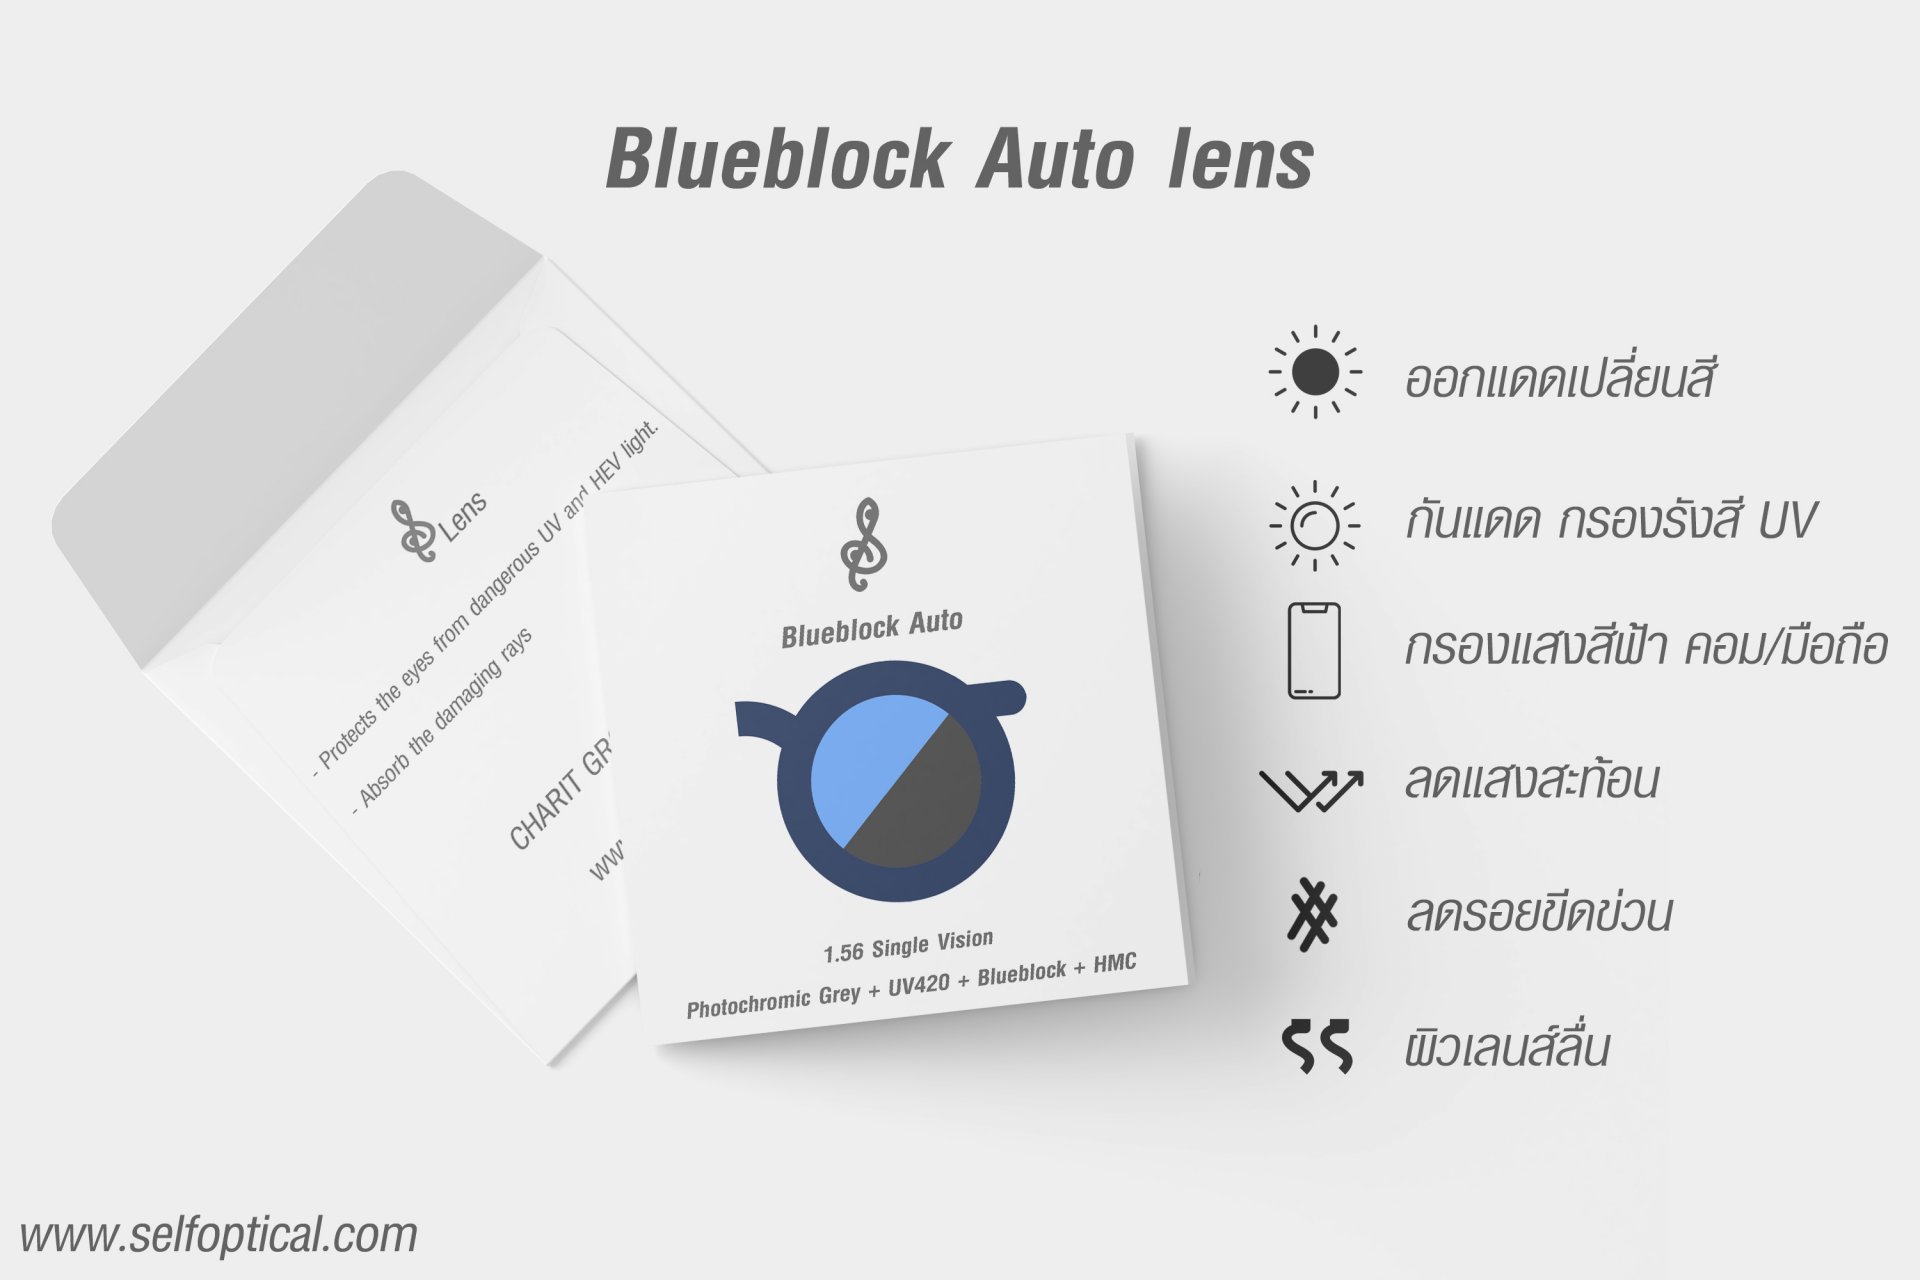 Blueblock Auto Lens